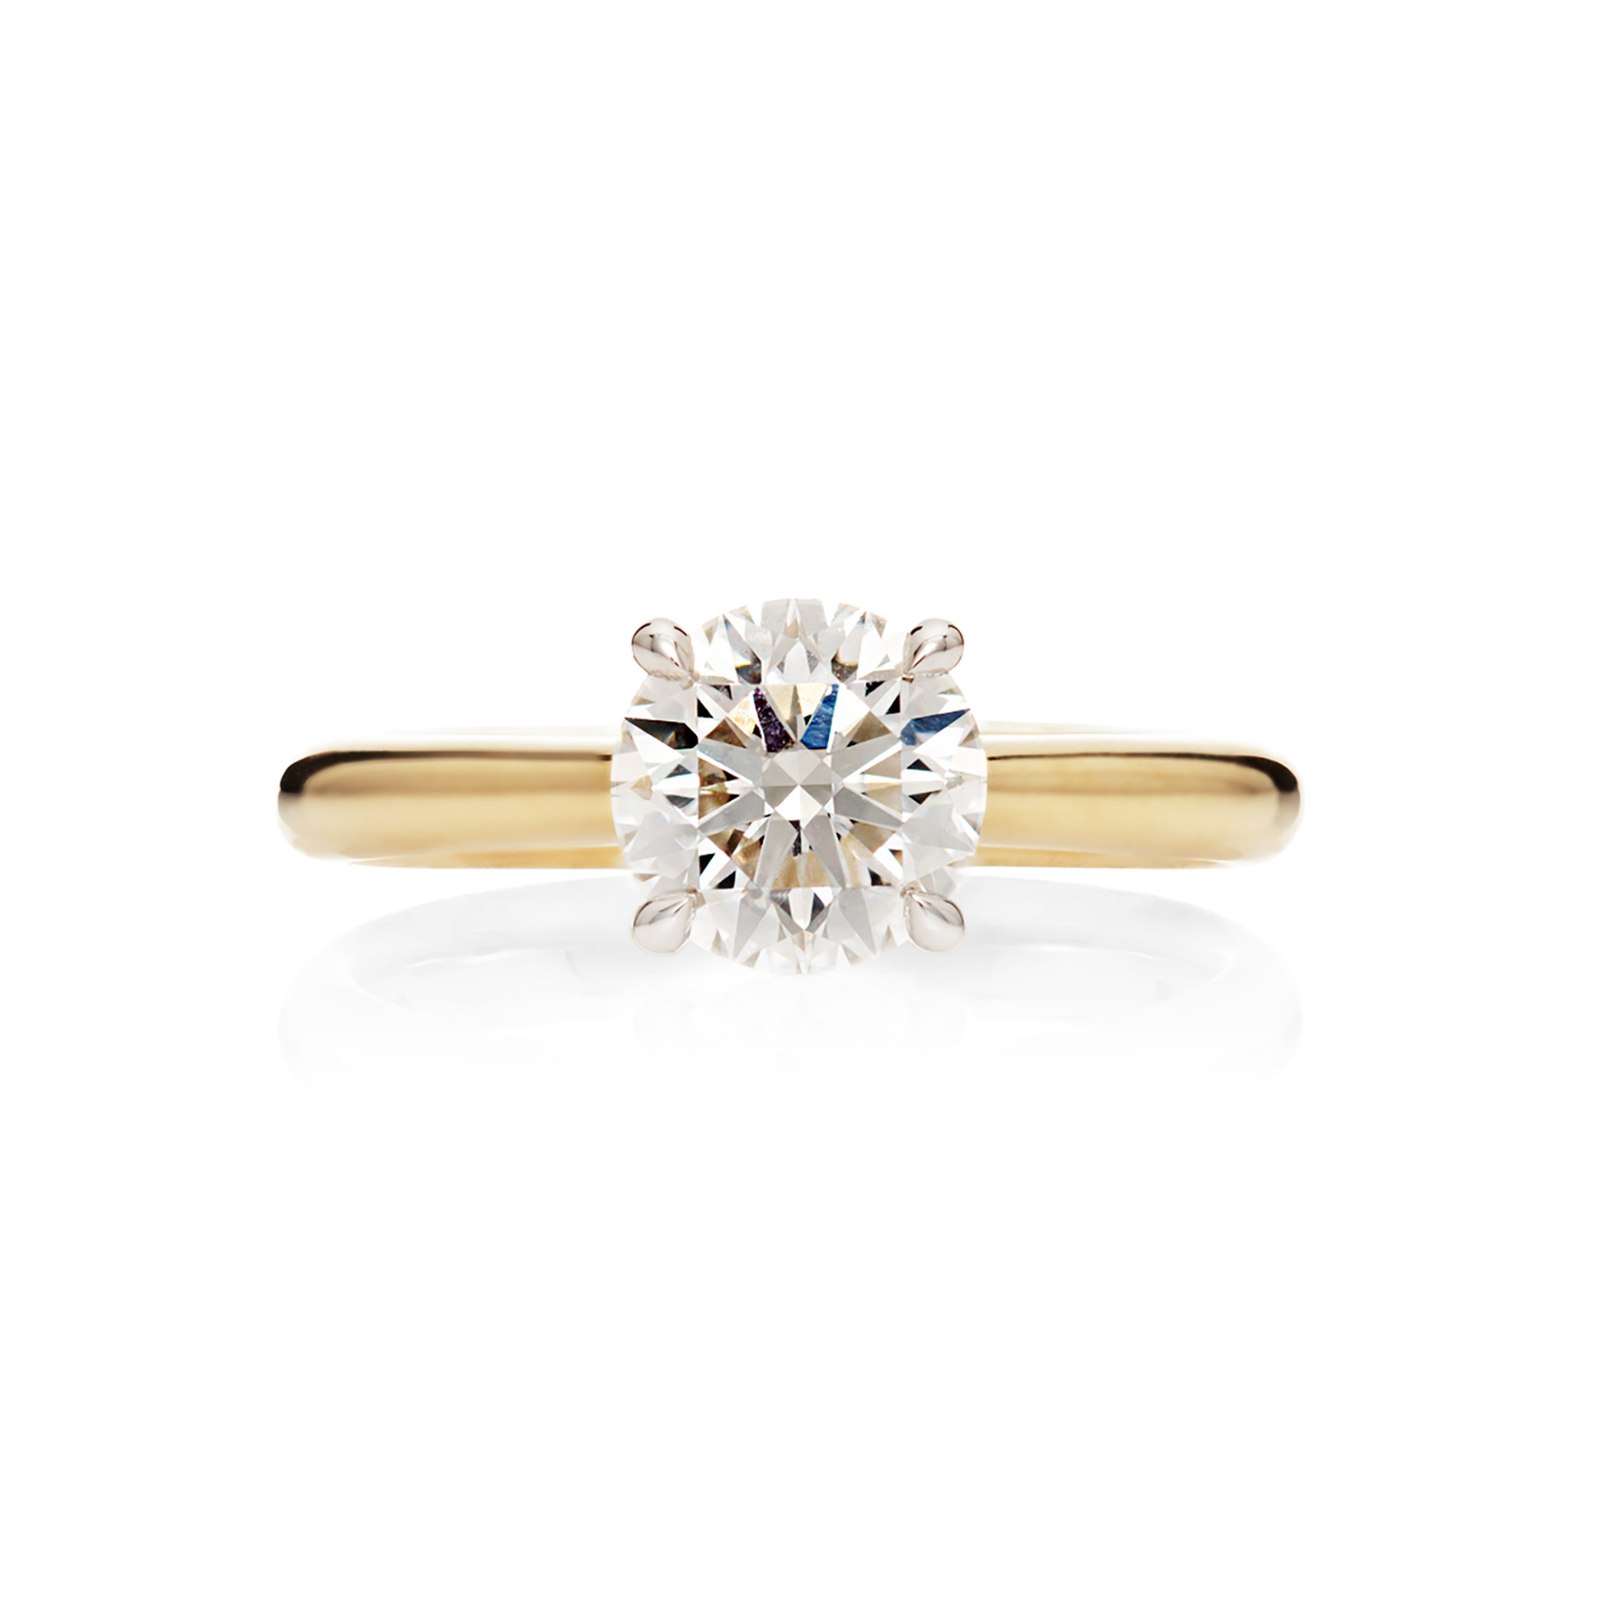 FINEROCK 1/4 Carat Diamond Engagement Rings in 10K Rose Gold (Ring Size 4)  | Amazon.com